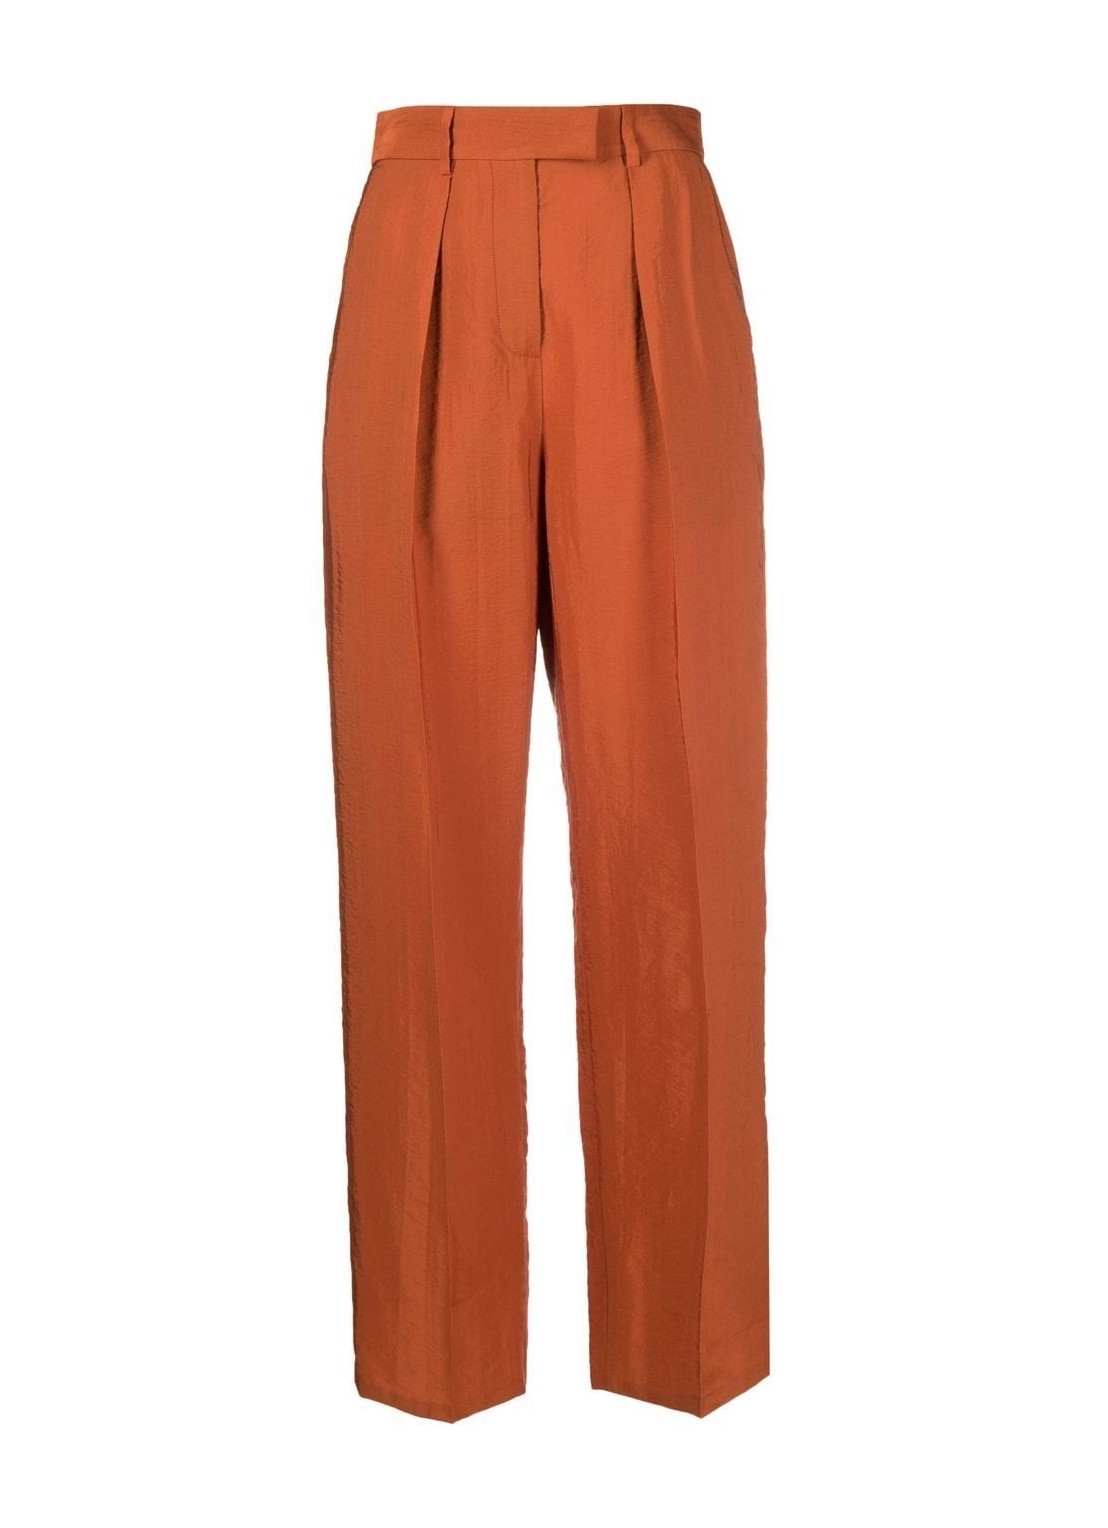 Pantalon karl lagerfeld pant  woman tailored day pants 231w1007 187 talla naranja
 